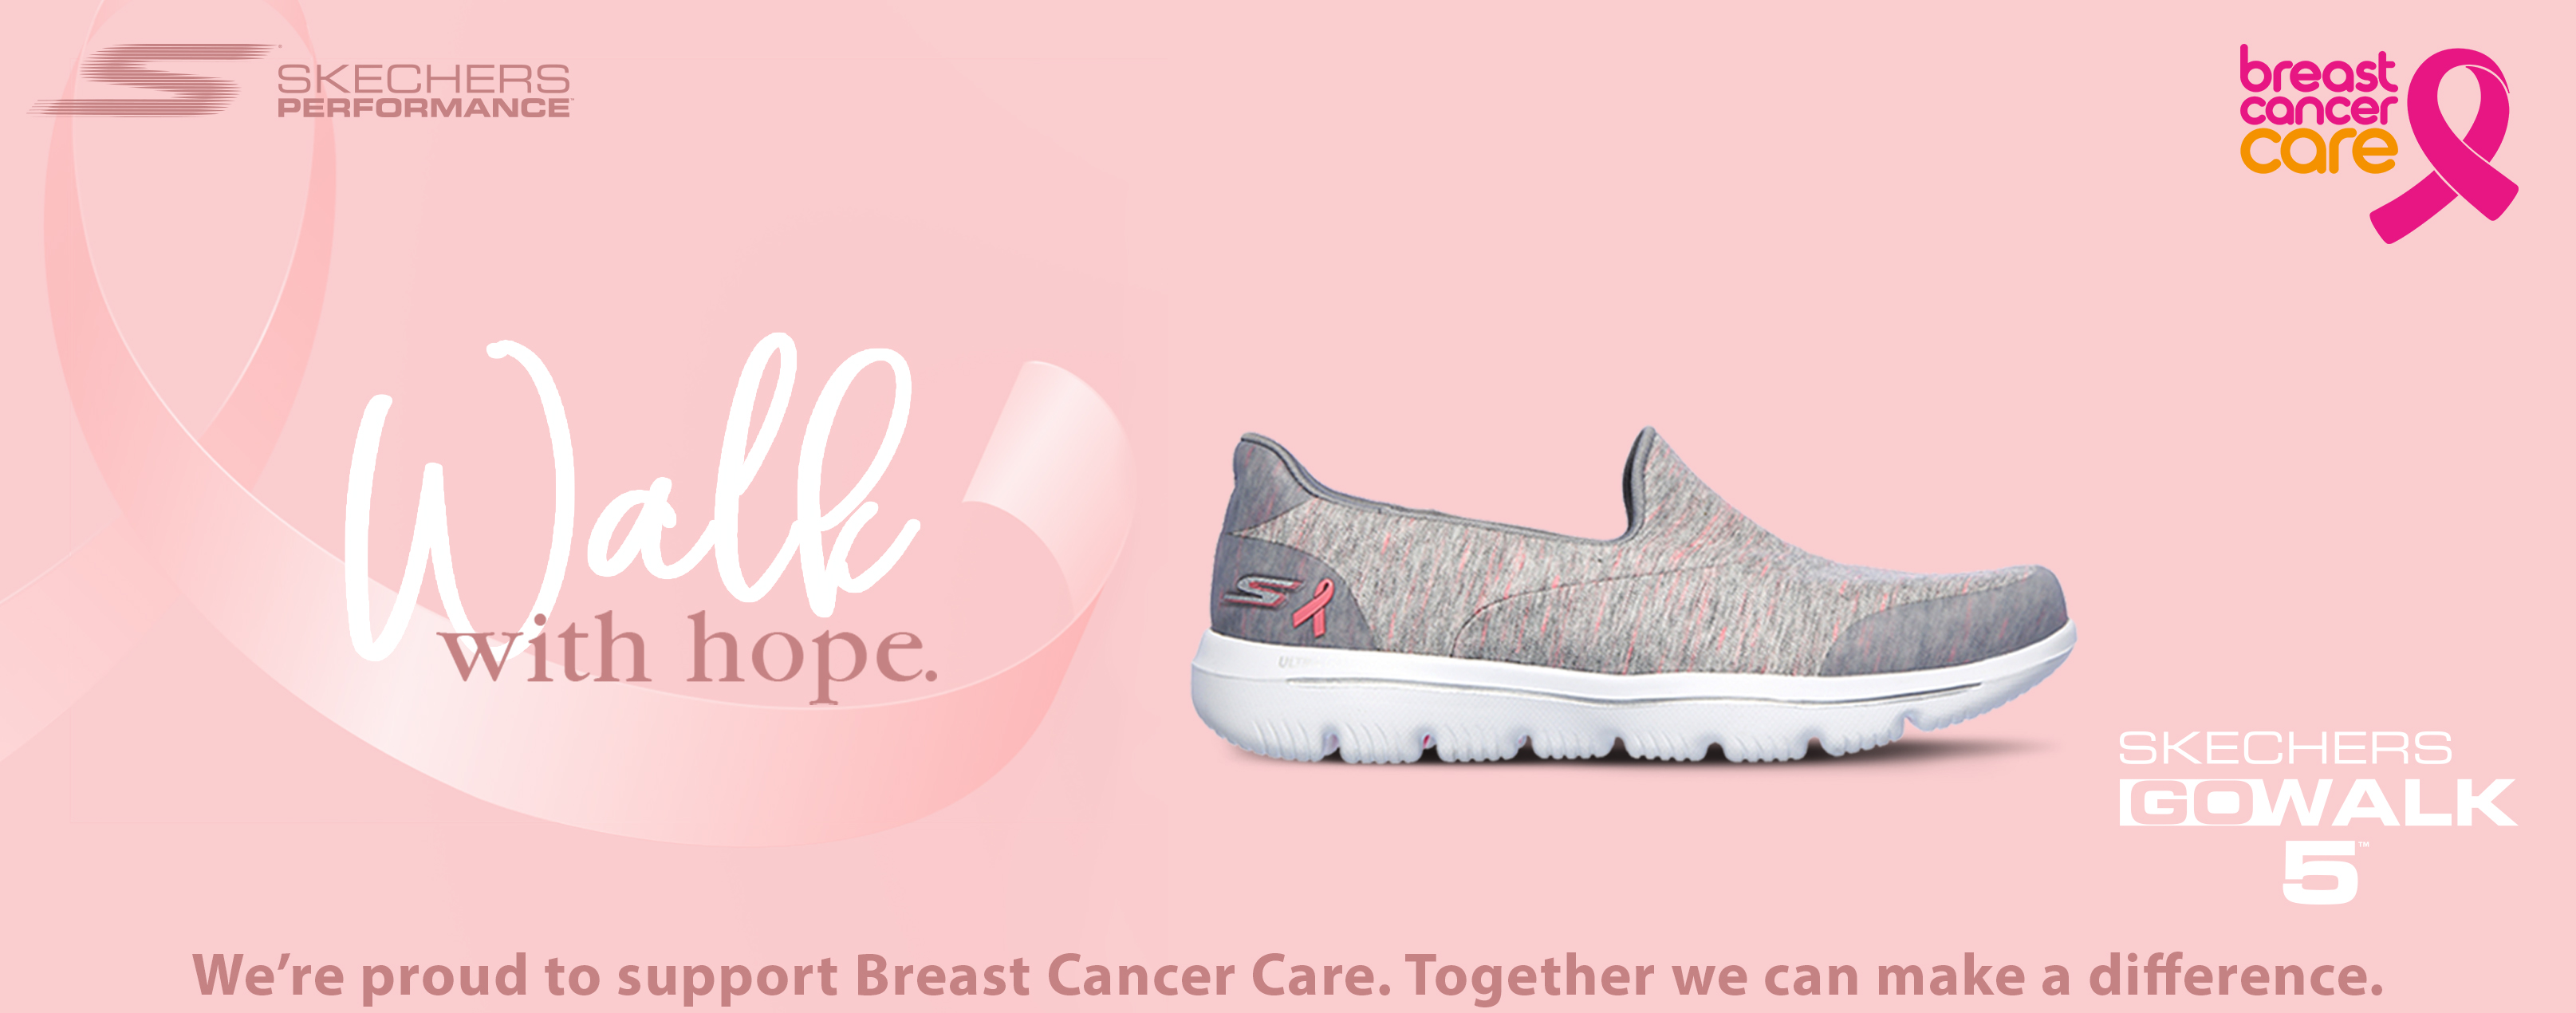 skechers go walk breast cancer awareness